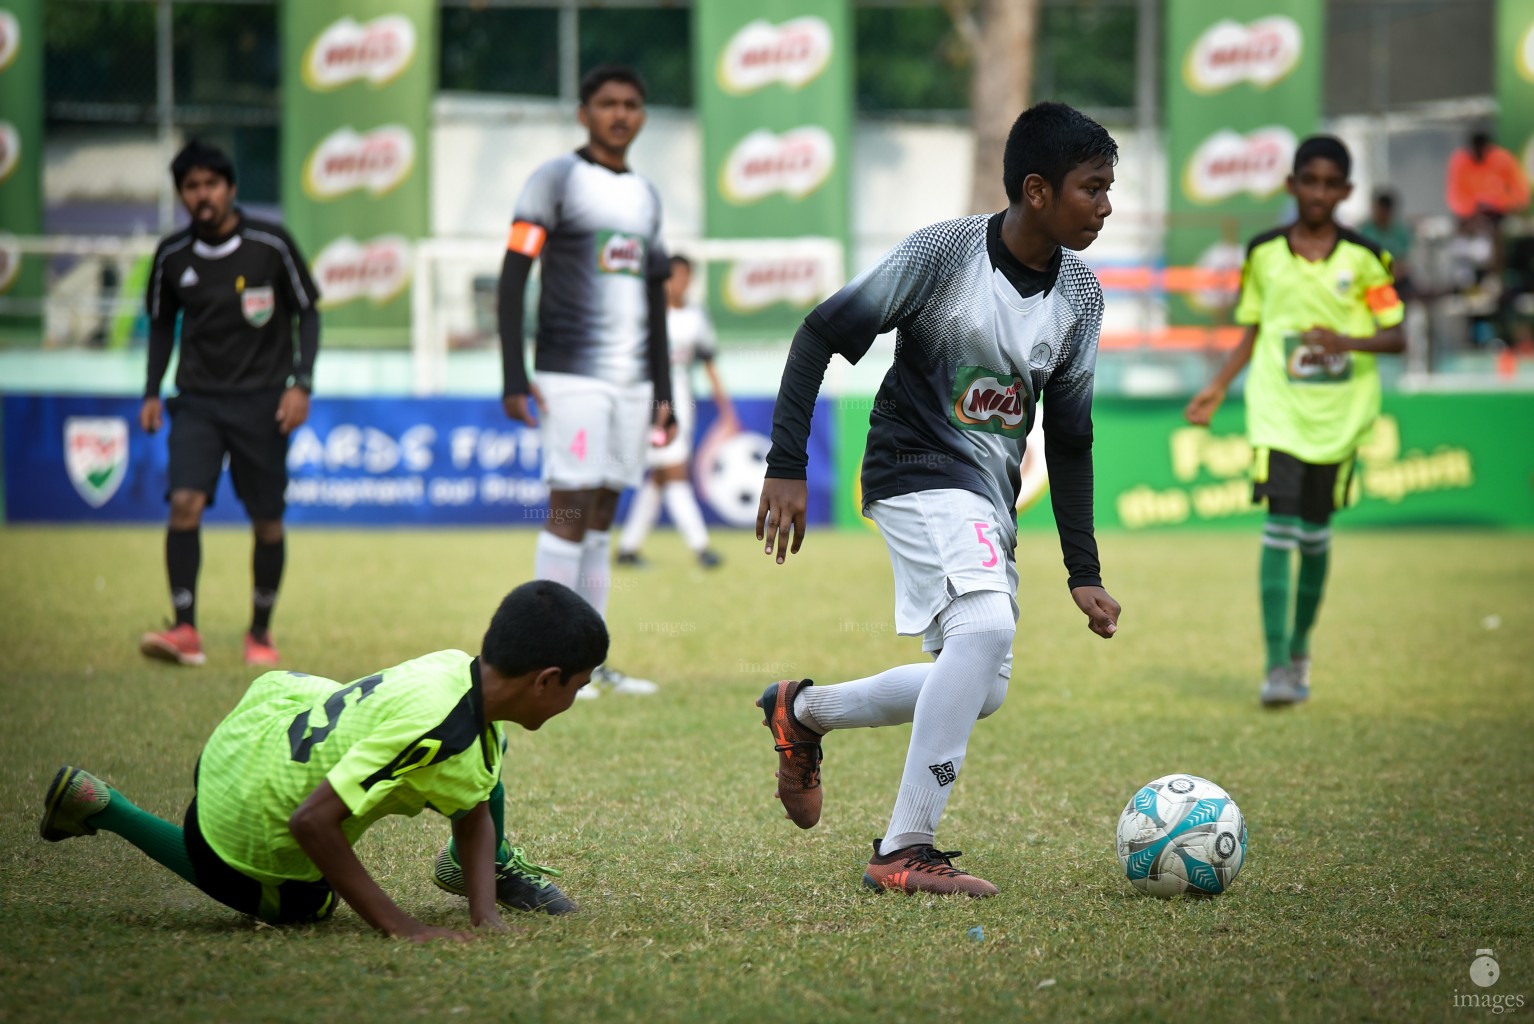 Milo Inter-school Football Tournament- Under 14 Ahmadhiyya vs Arabiyya